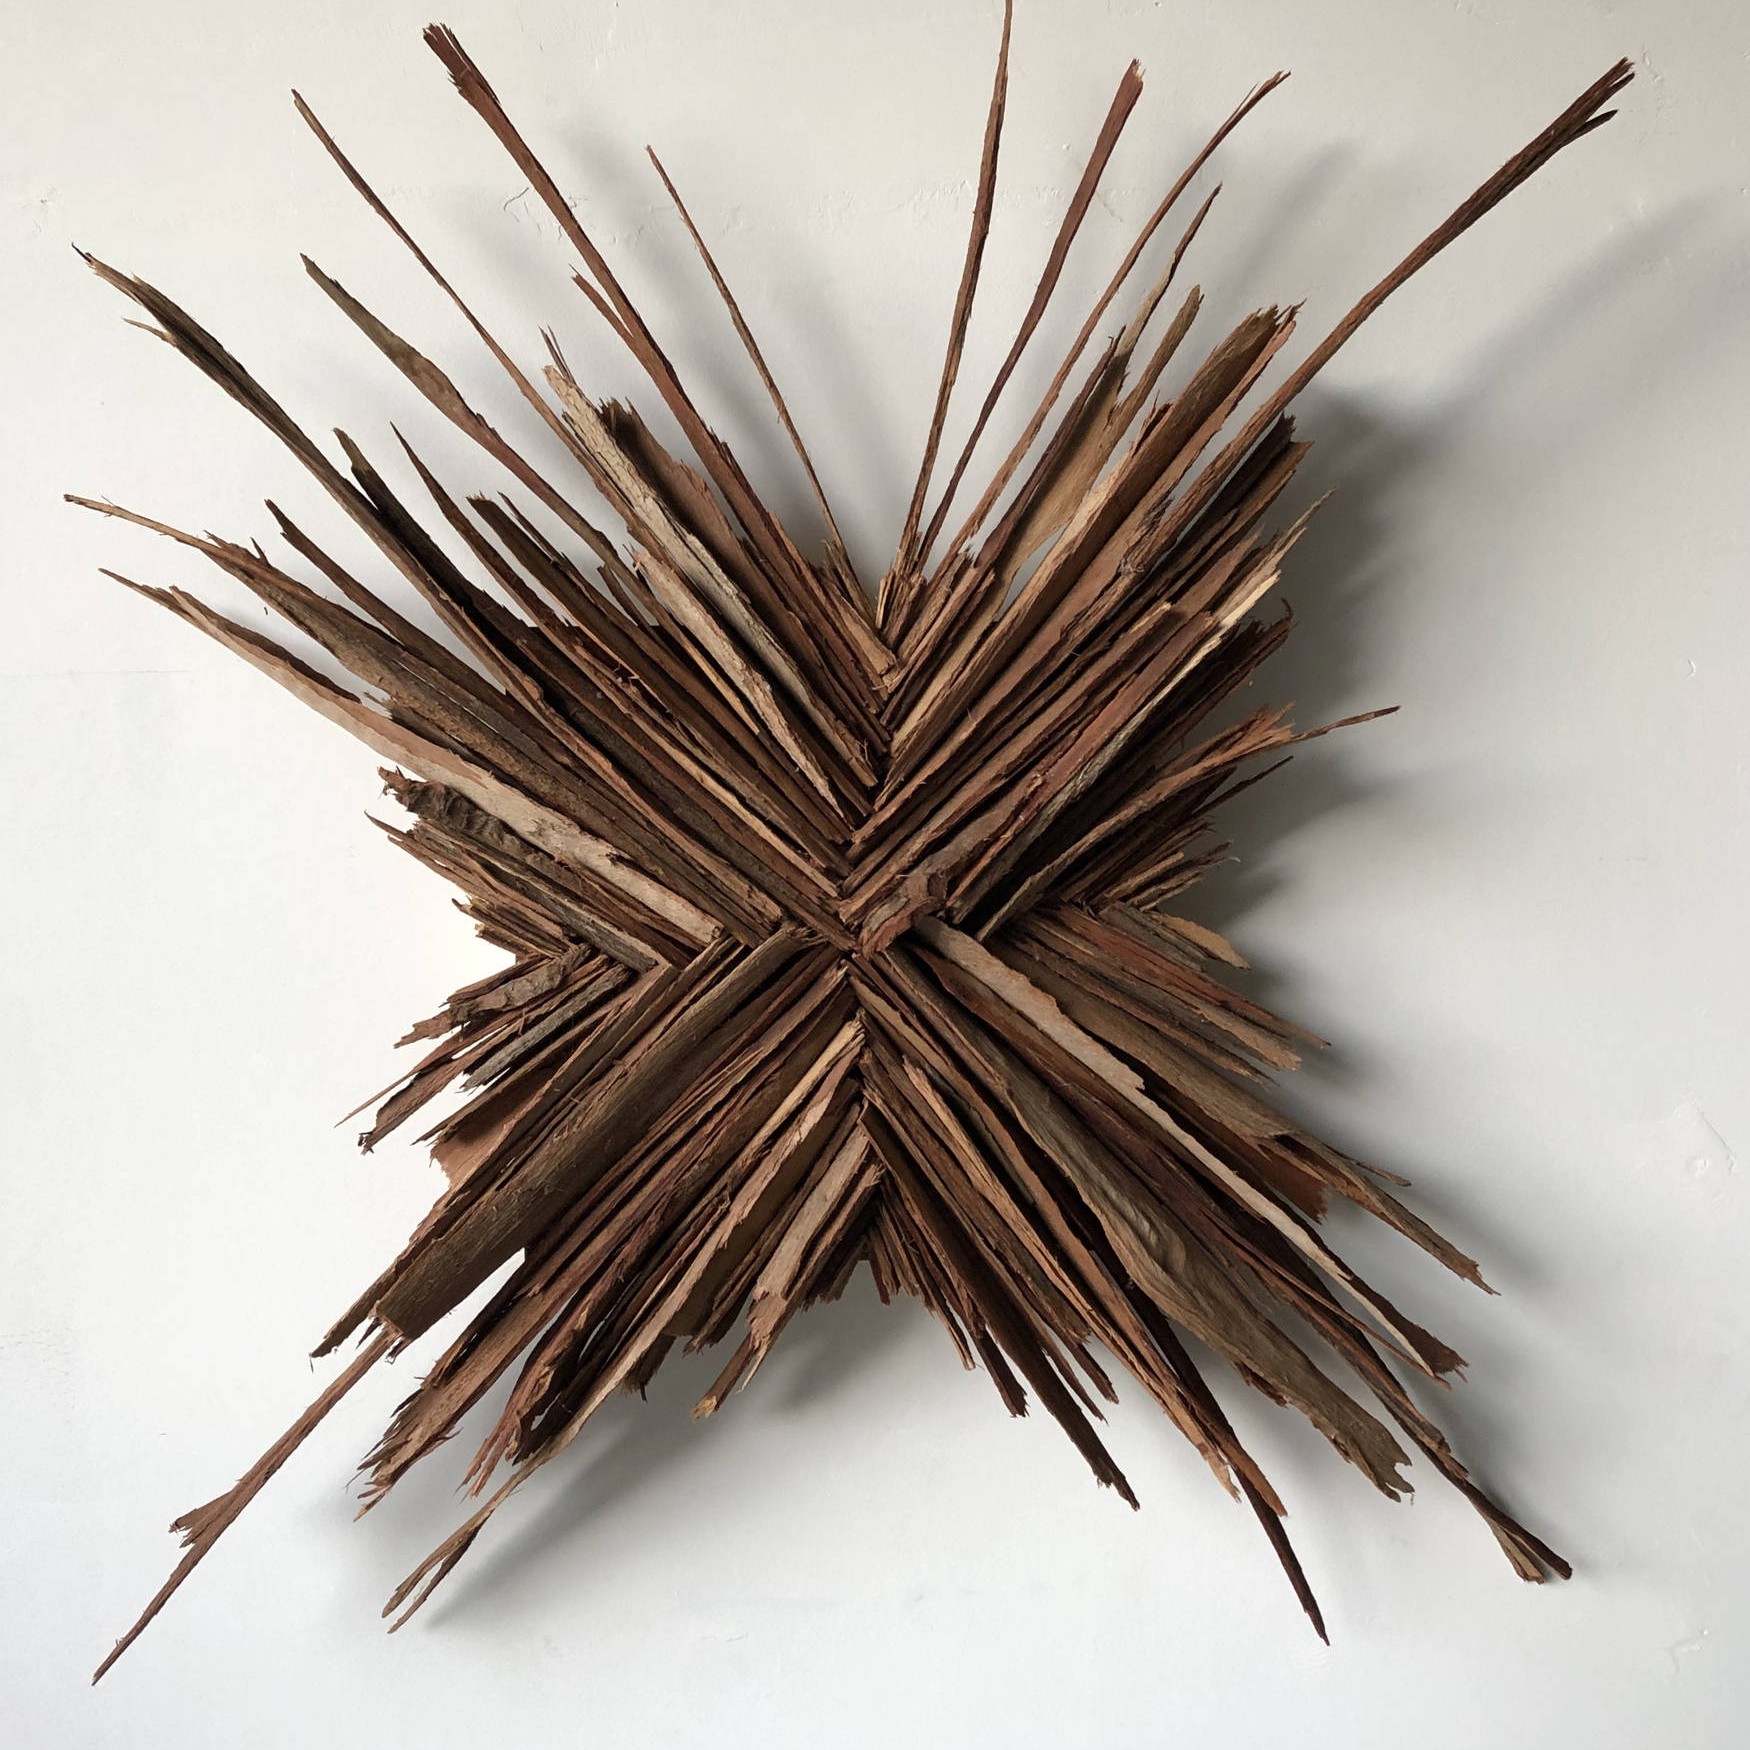 Exploded Sky – 2019 | Eucalyptus tree bark, acrylic medium, wood glue on wood panel | 24 x 24 in